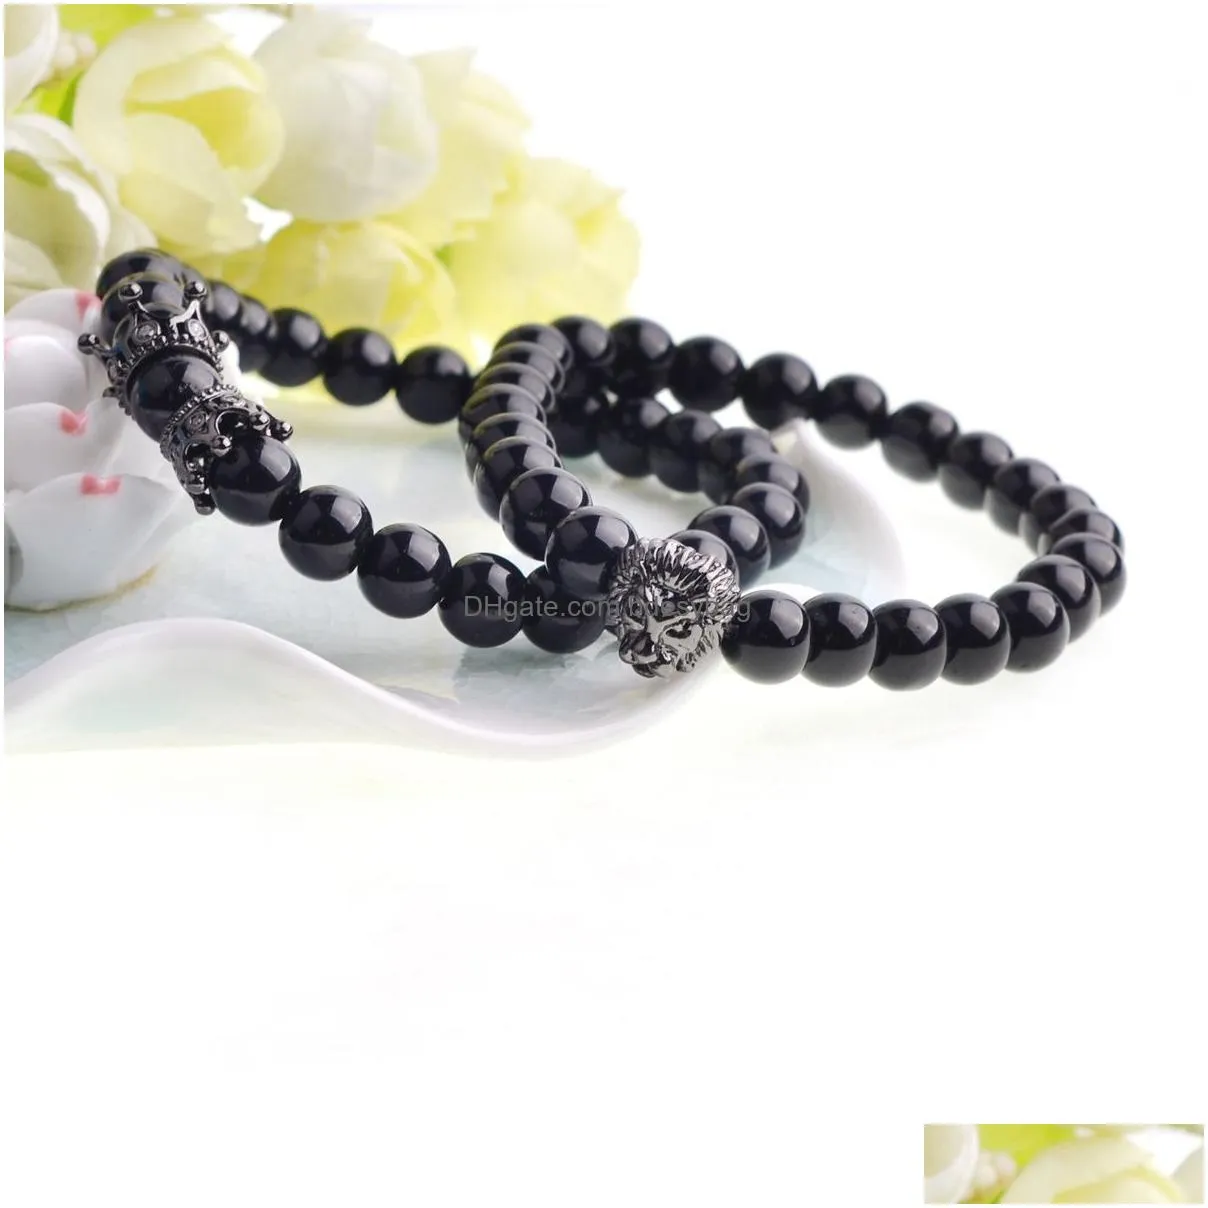 2 pcs/set animal king  head black onyx agate bracelet natural stone crown couple braclet sets for men hand jewelry accessories